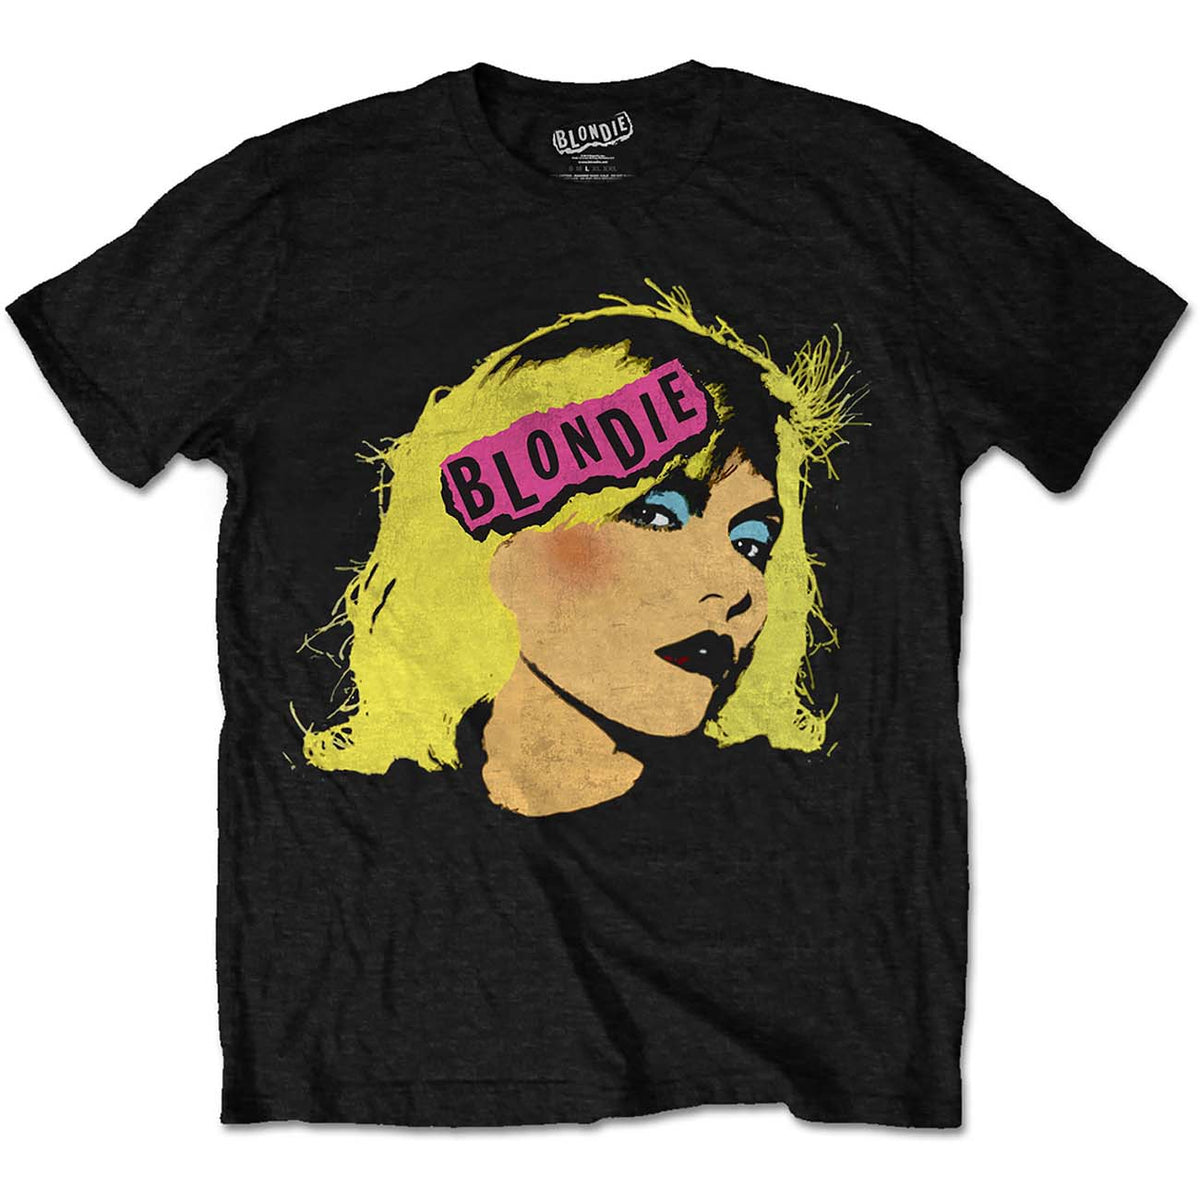 Blondie Unisex T-Shirt - Punk Logo - Black Official Licensed Design